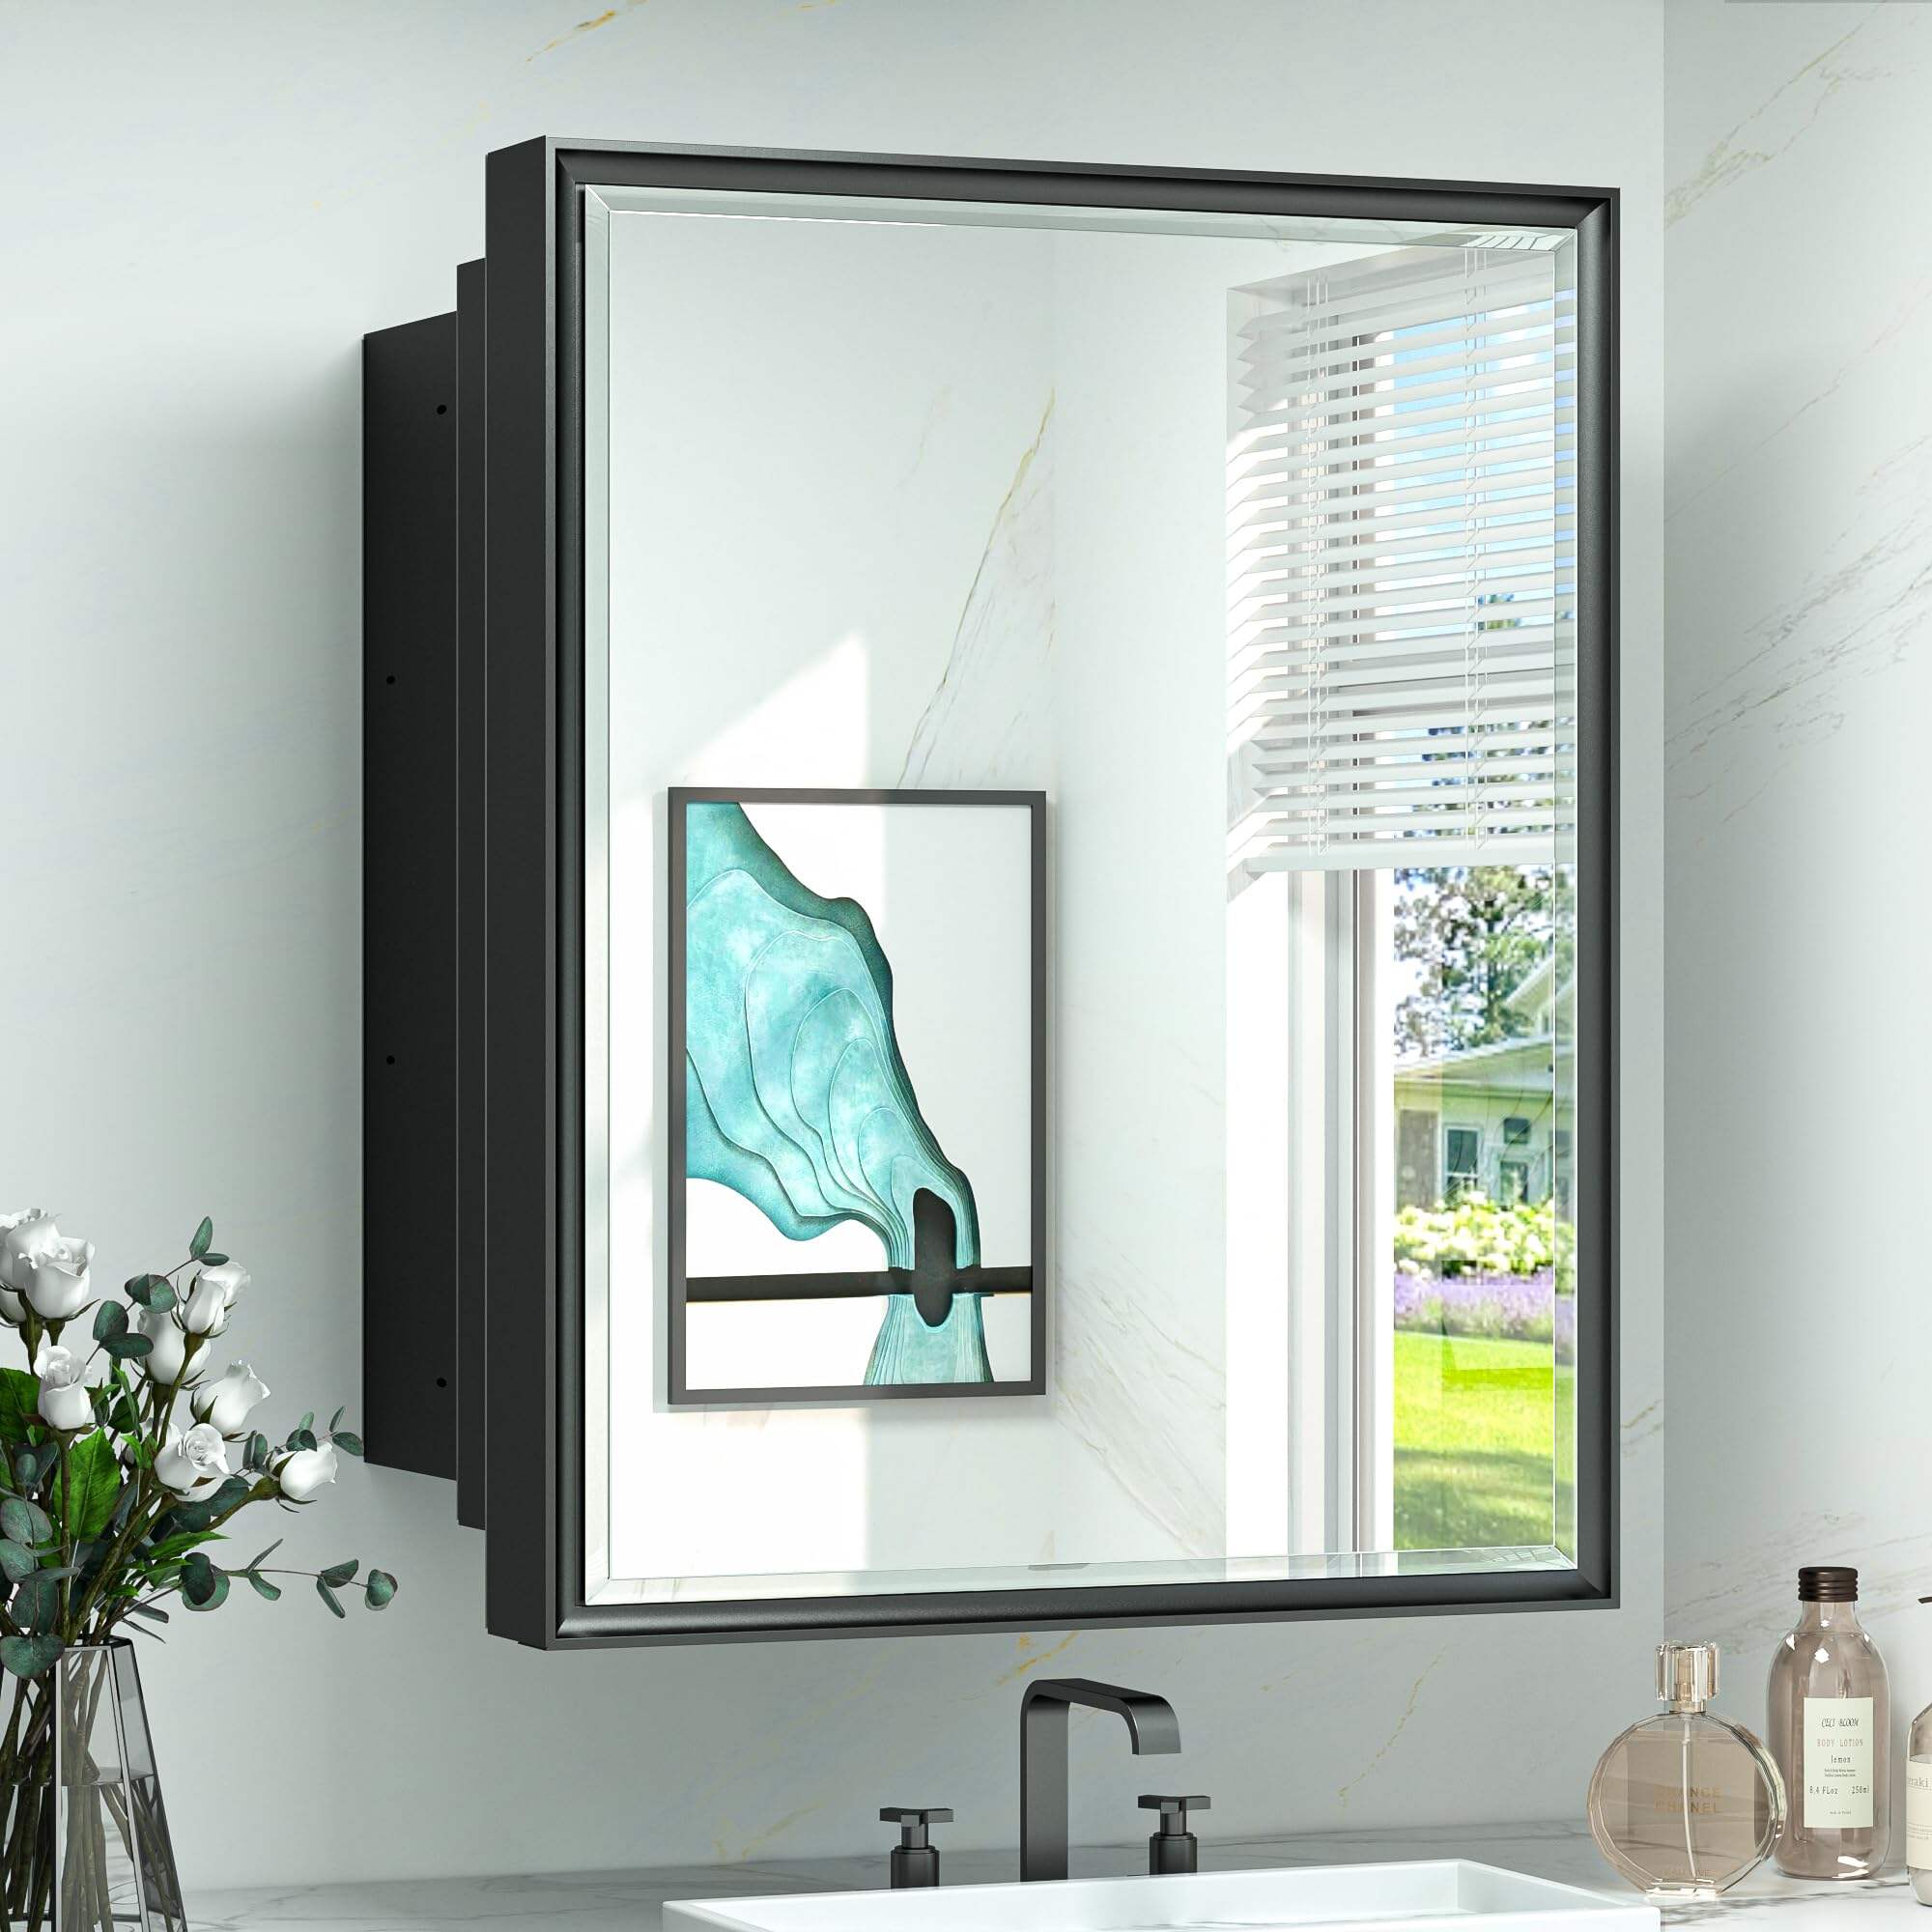 Foshan Haohan Smart Home Co., Ltd. 26x30 Recessed Medicine Cabinet Bathroom Vanity Mirror Black Metal Framed Surface Wall Mounted with Aluminum Alloy Beveled Edges Design 1 Door for Modern Farmhouse